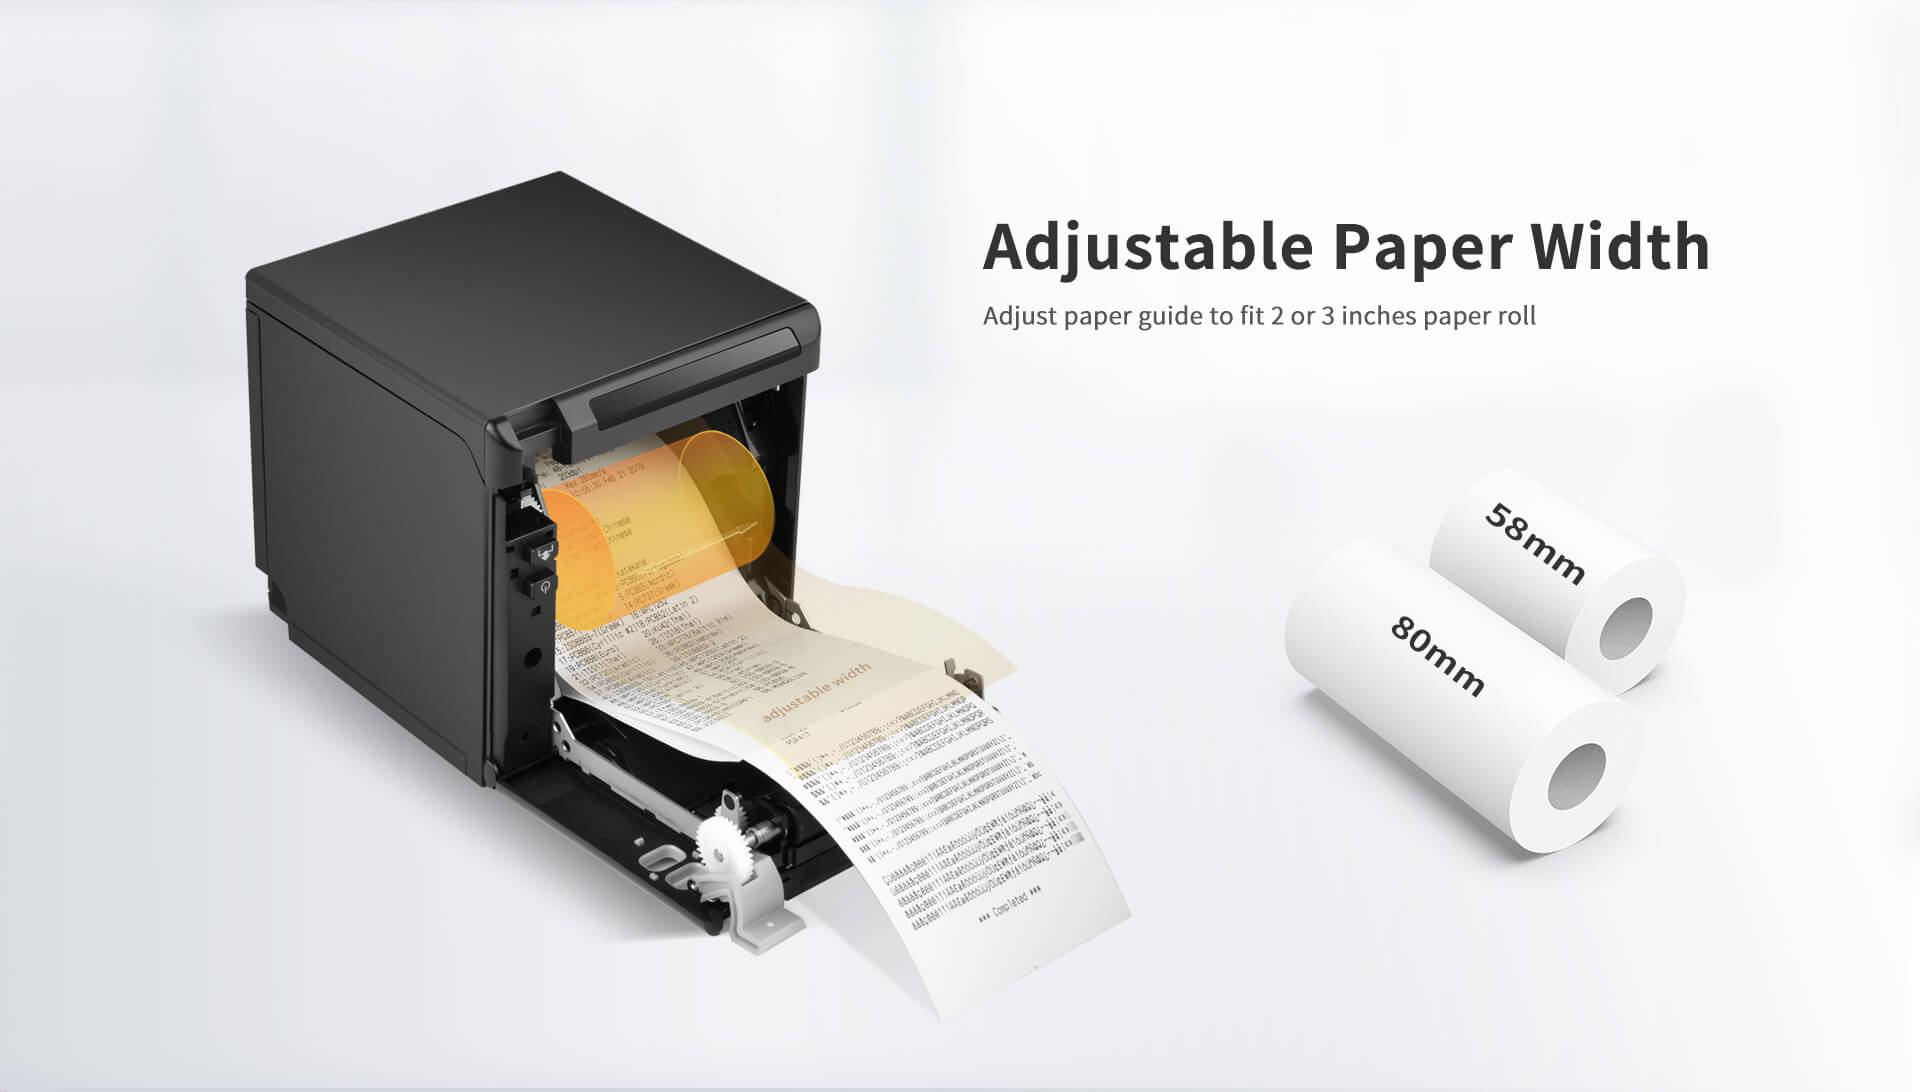 HPRT adjustable paper width printer TP808